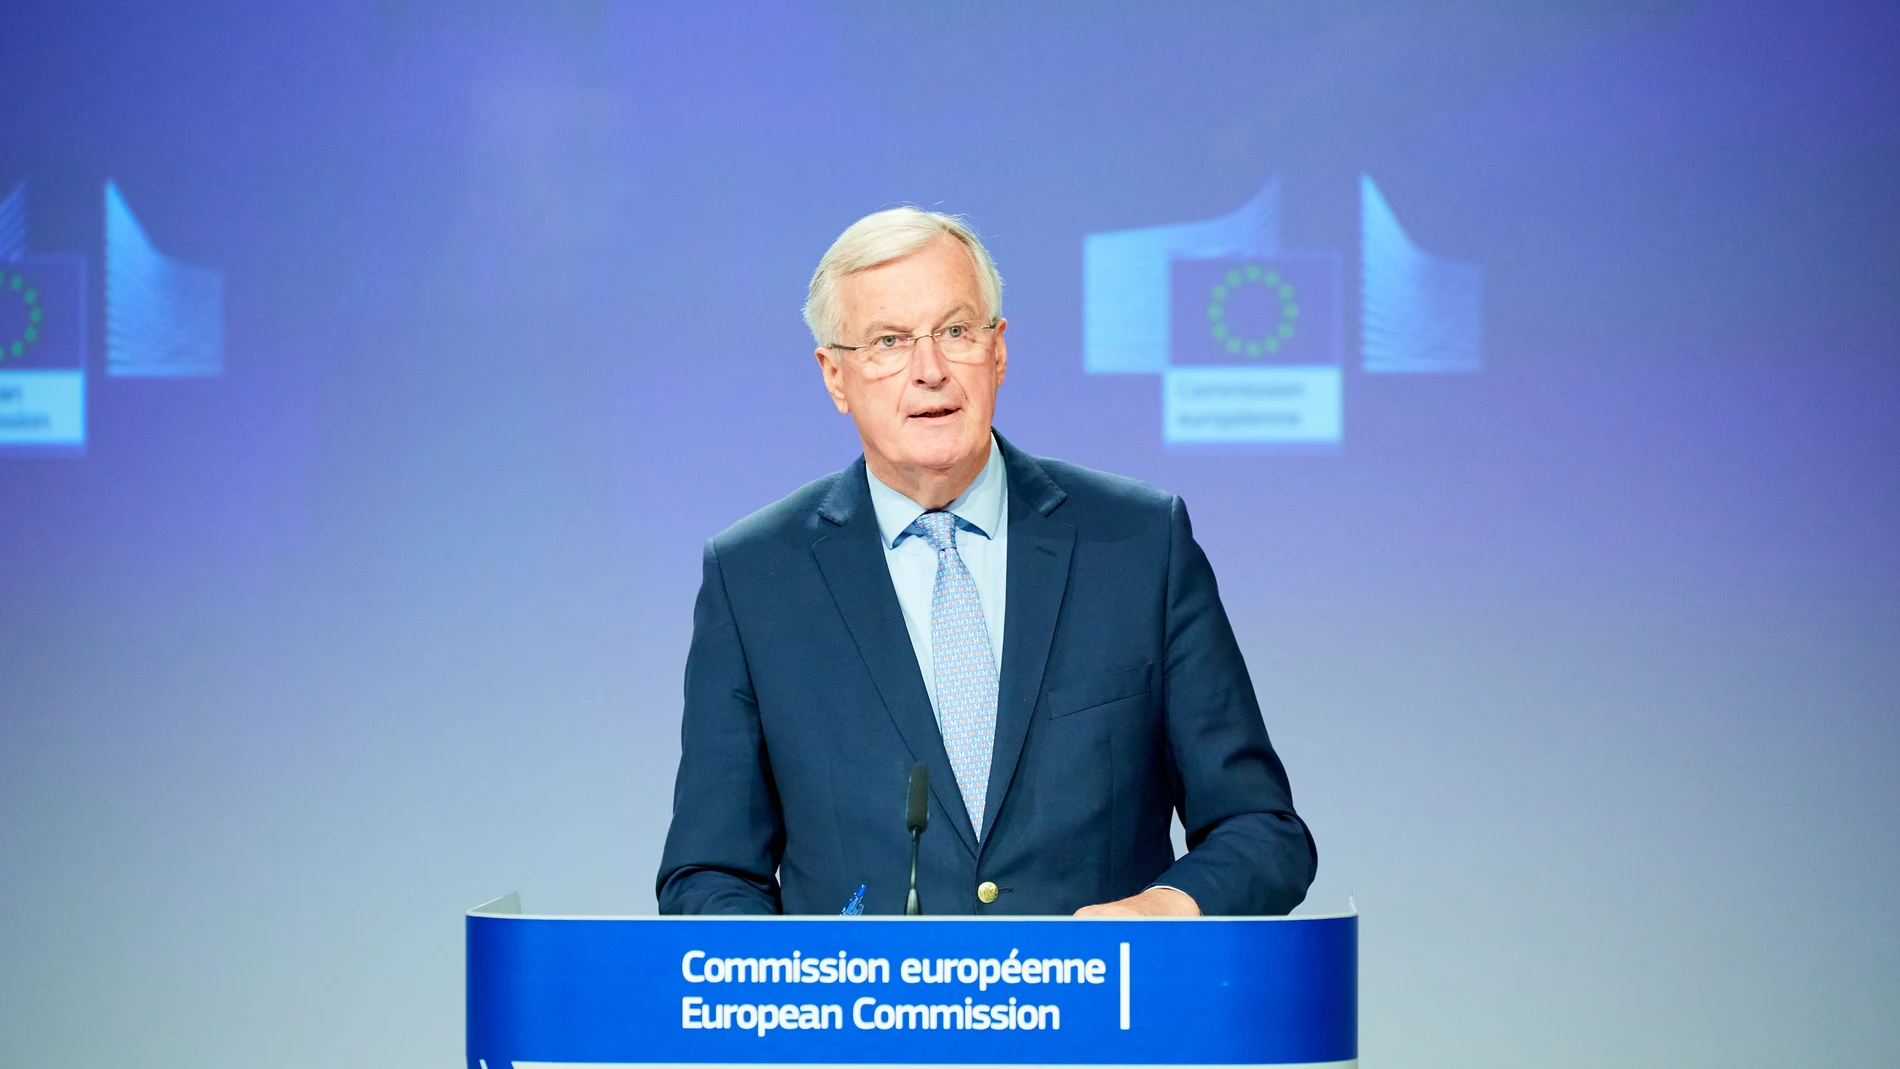 Michel Barnier press conference in Brussels